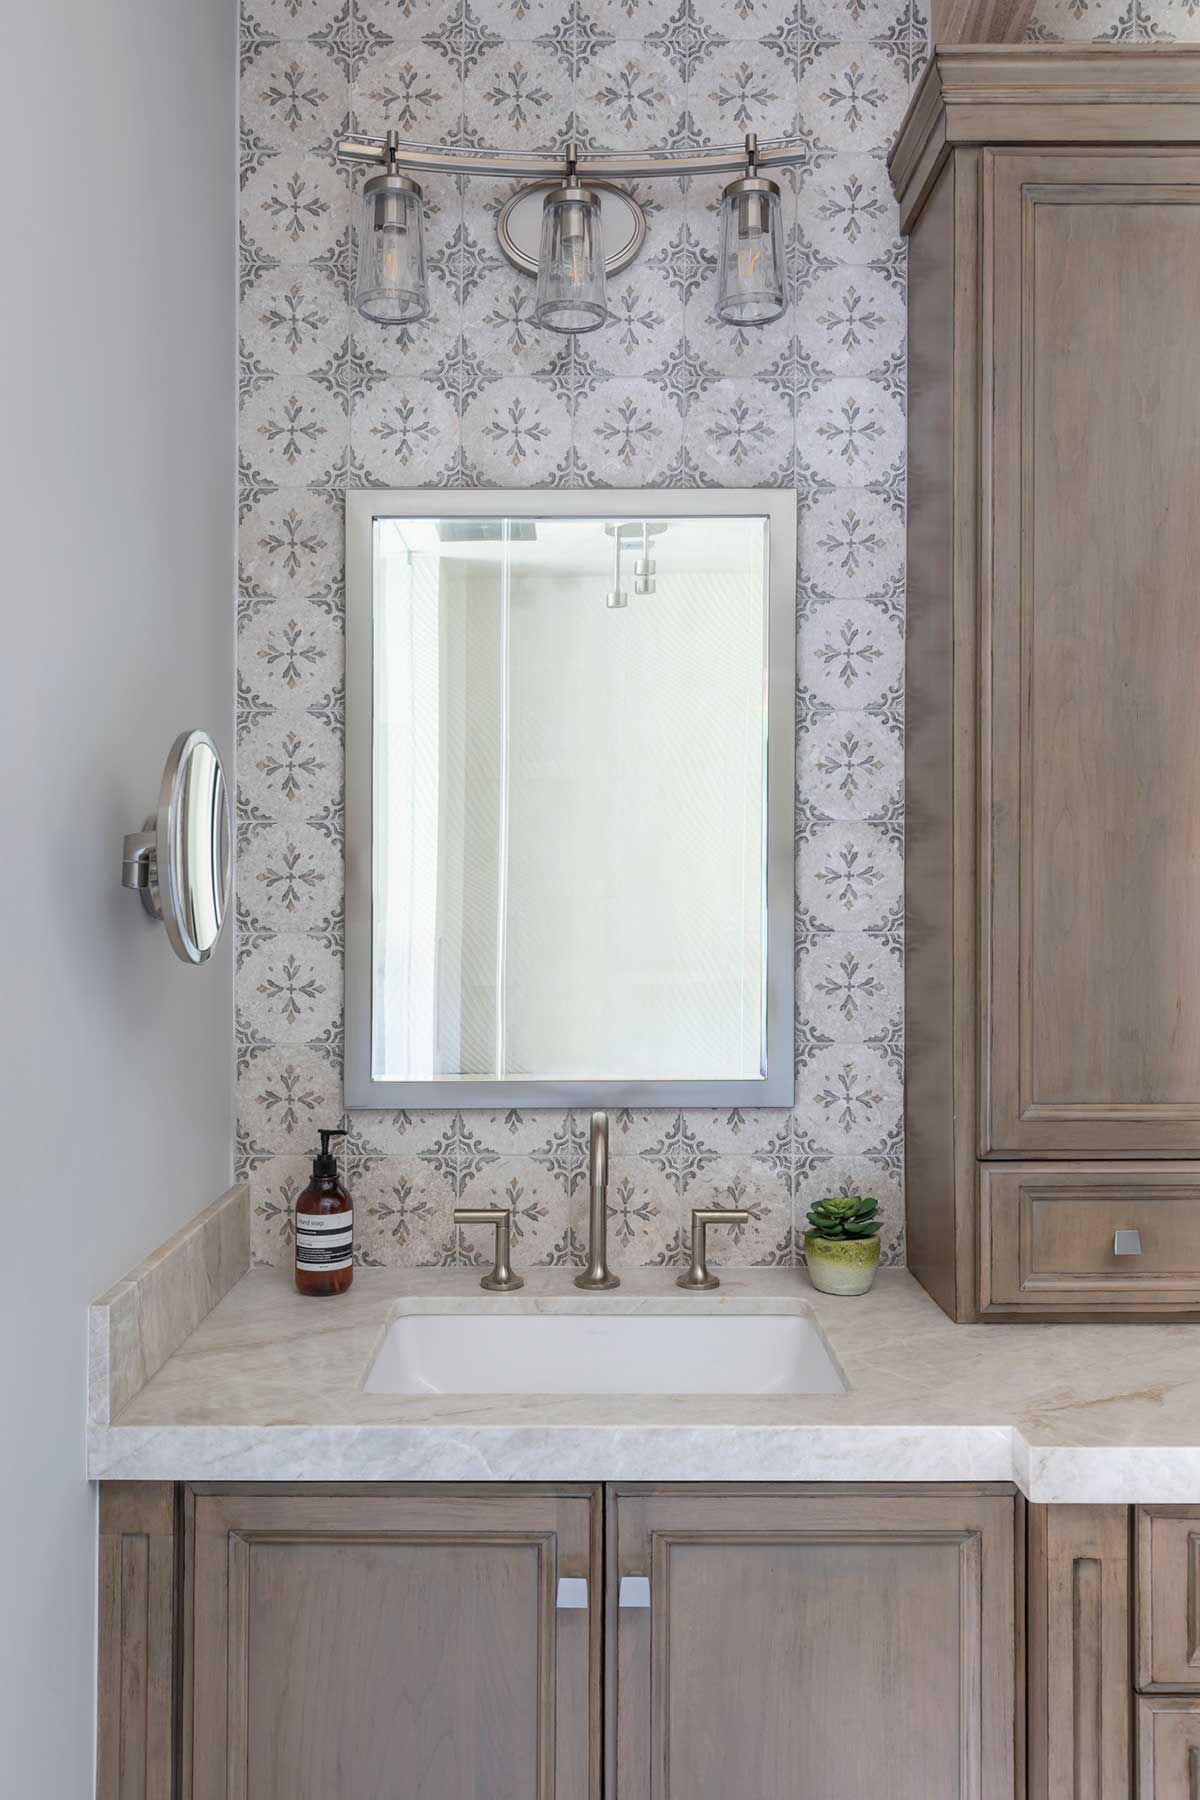 Decorative bathroom tile - Crystal Topaz Vanity close